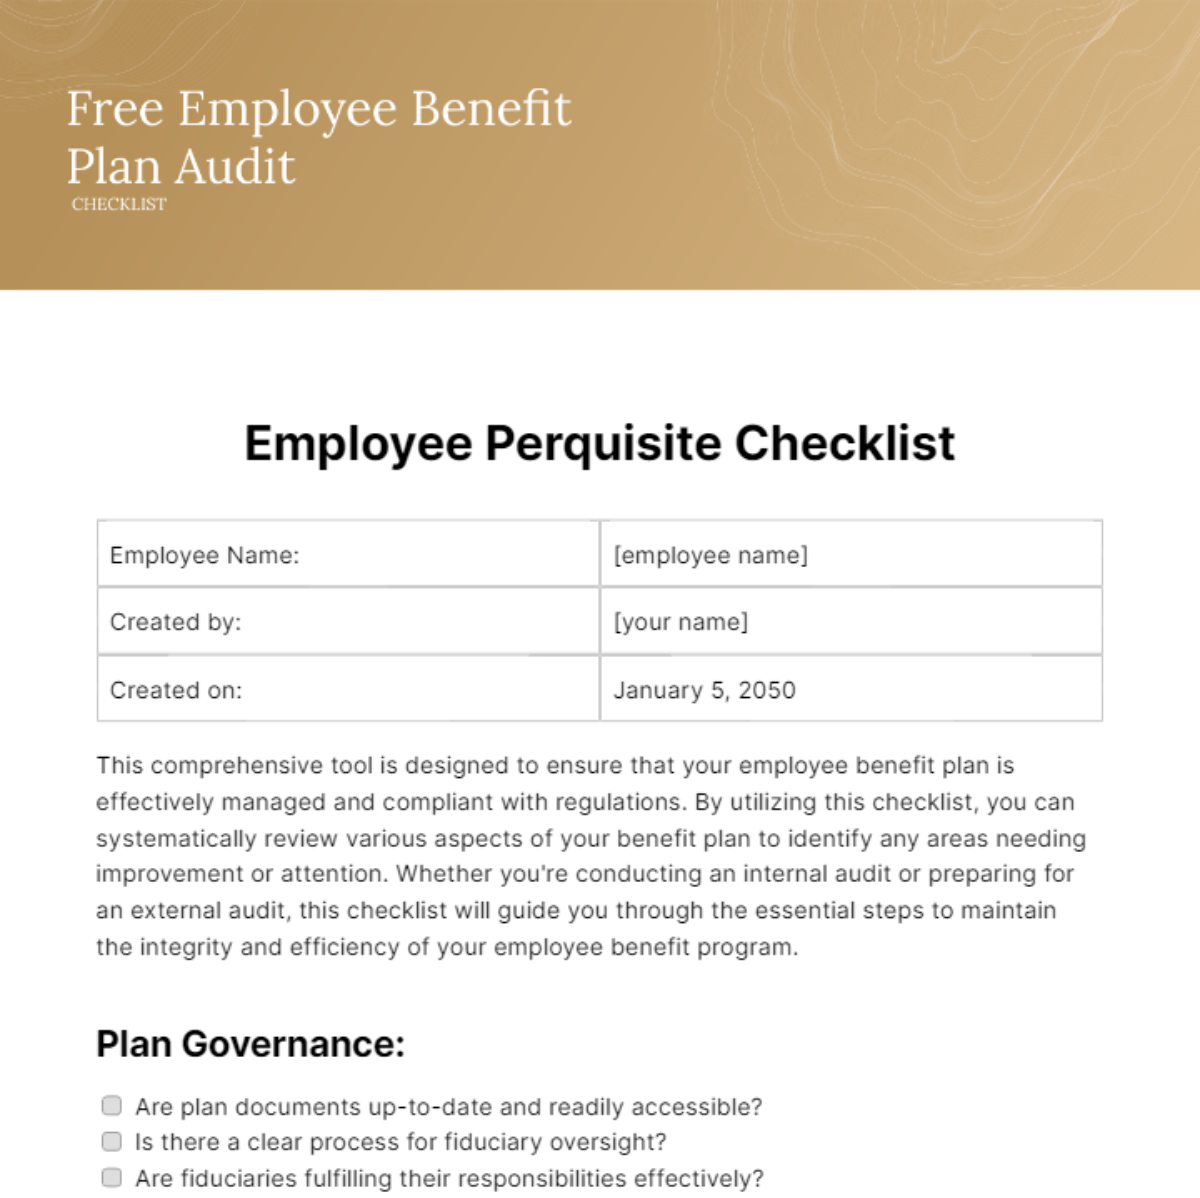 Free Employee Benefit Plan Audit Checklist Template